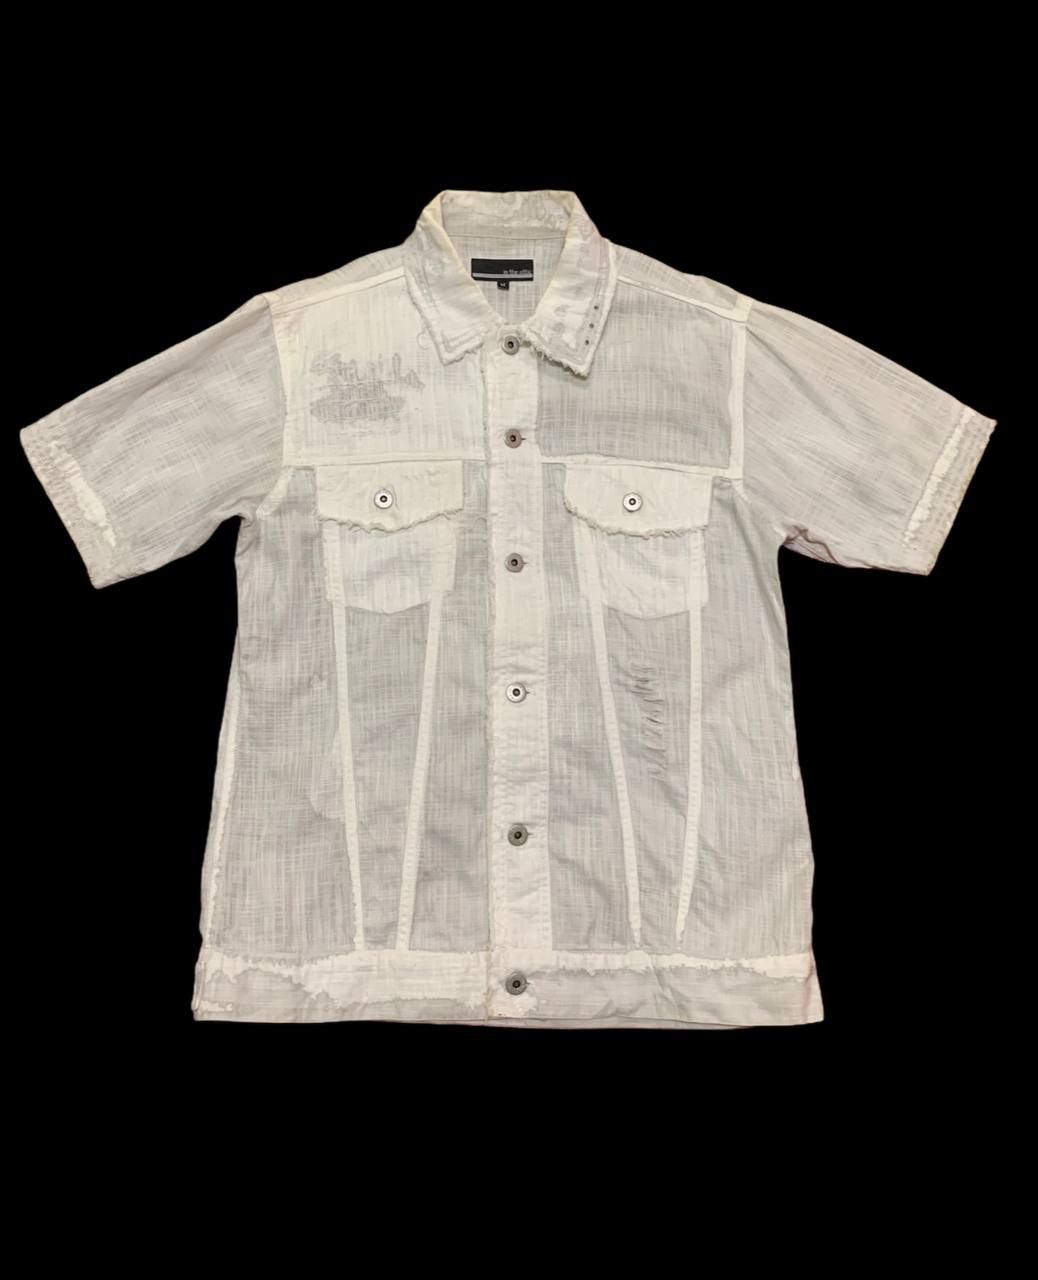 Japanese Brand - Scab Distressed Shirt Trucker Design - 3